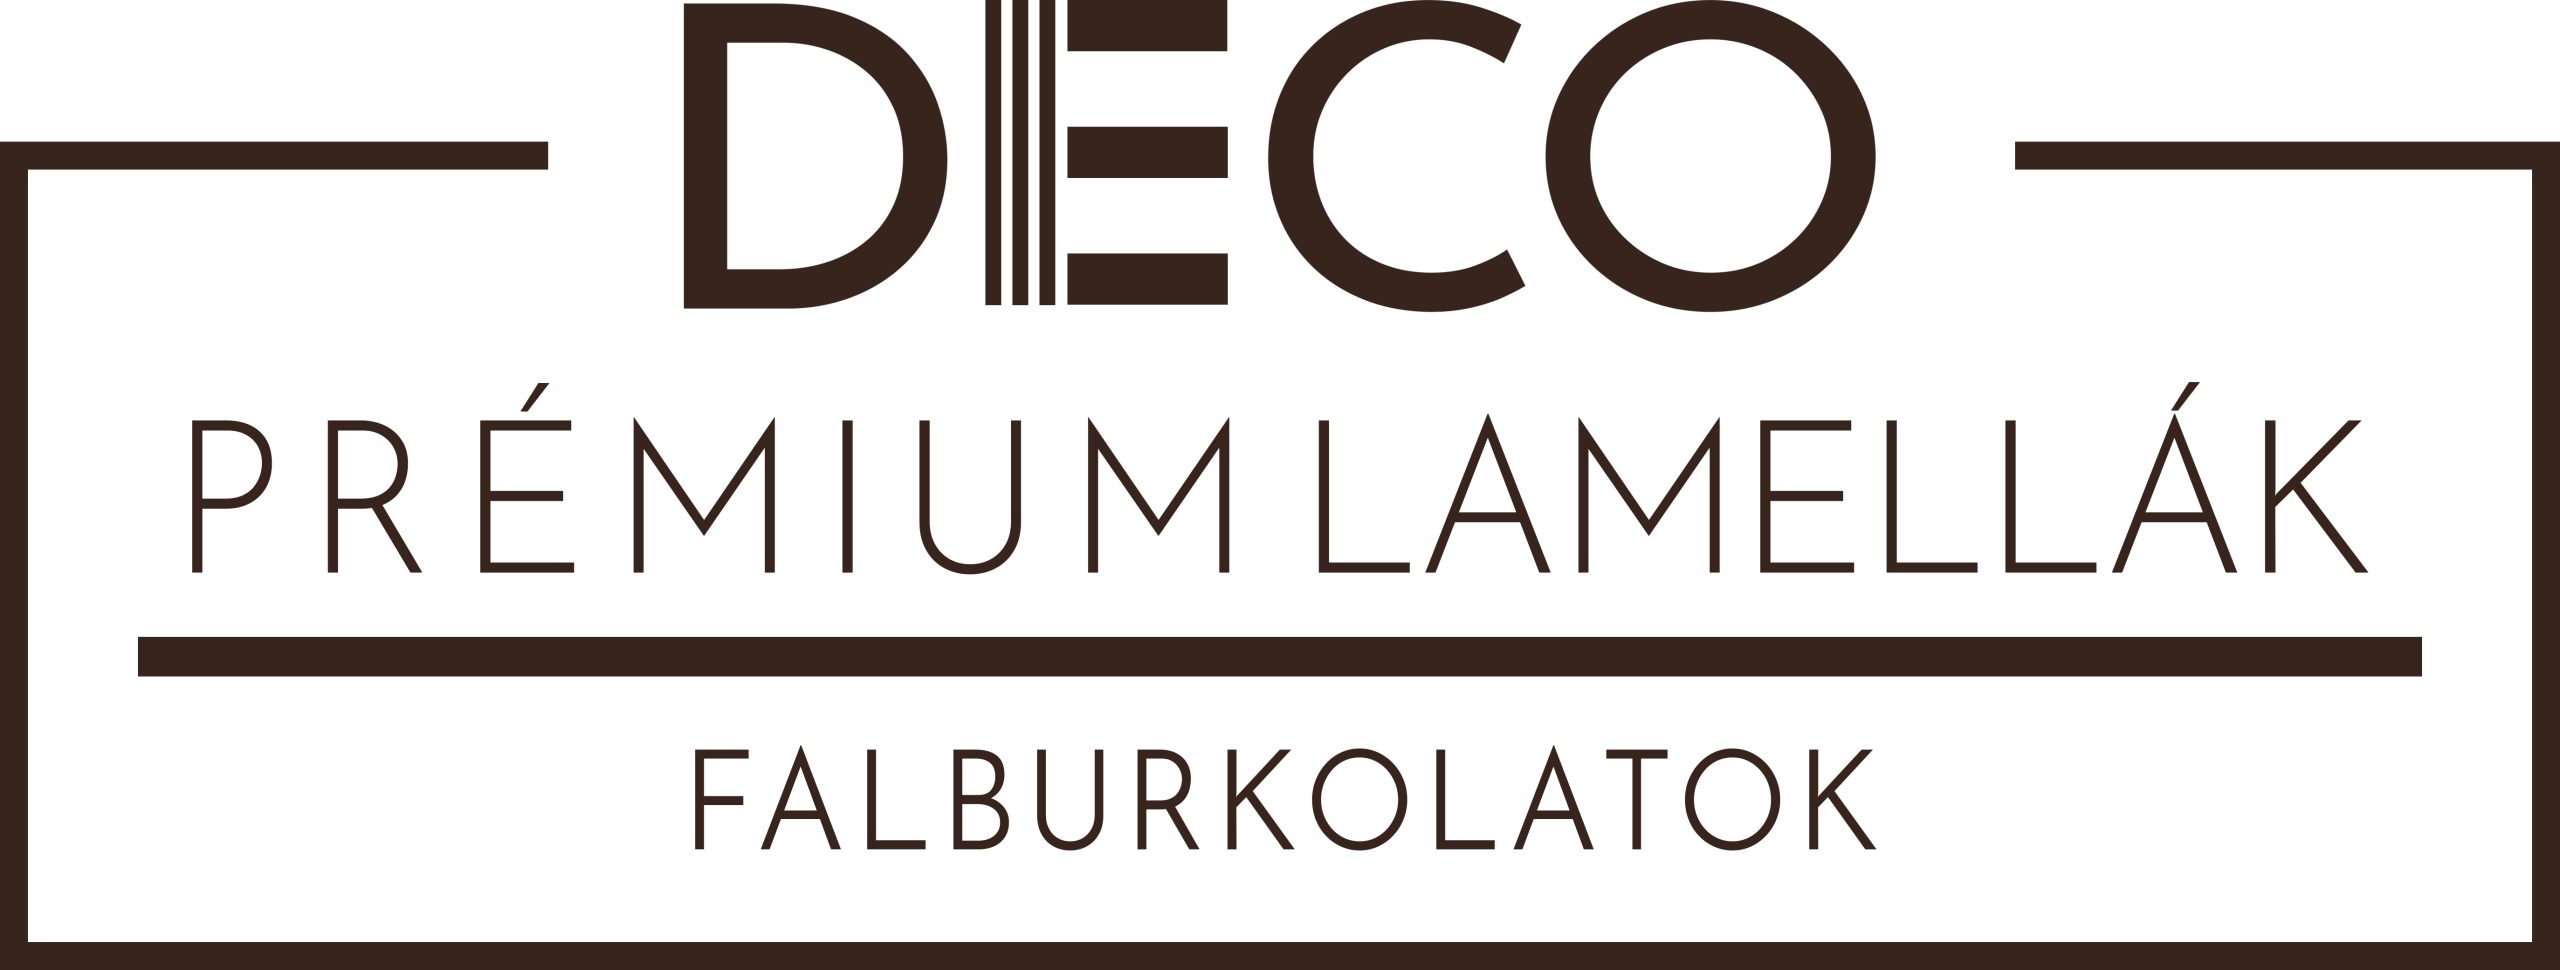 Deco Premium Lamellak logo